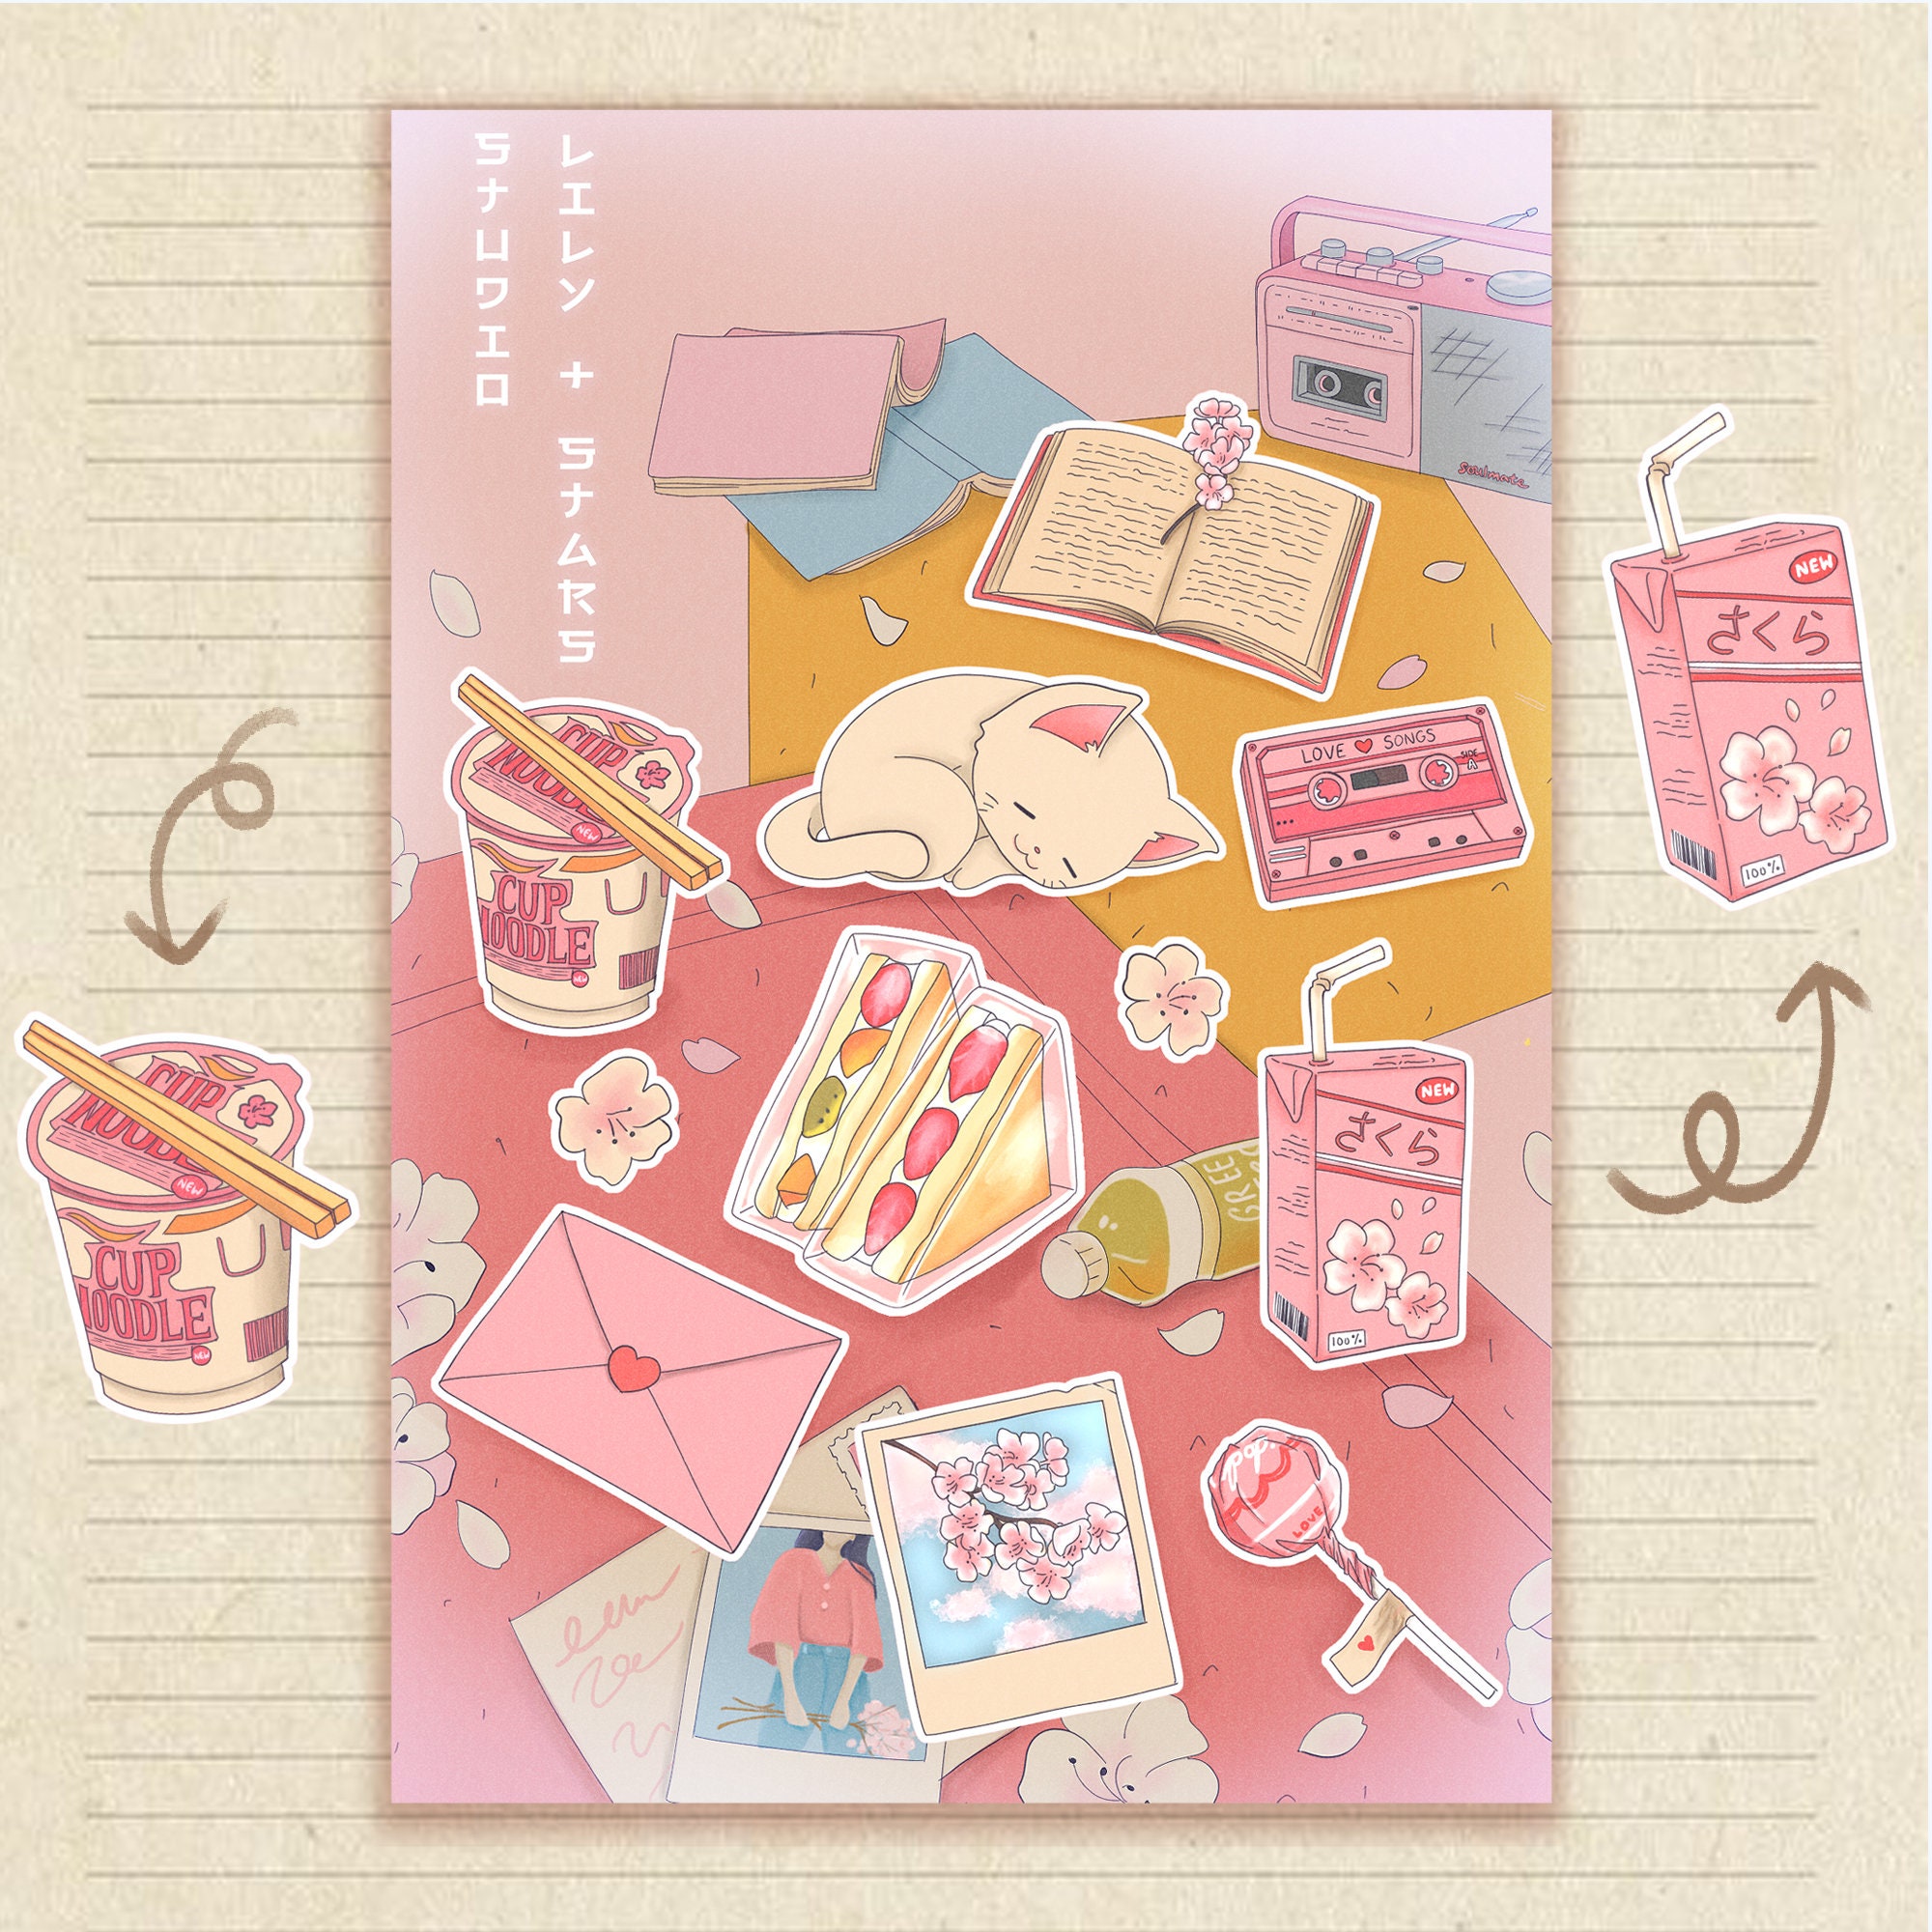 Sakura Planner Stickers, Hanami Deco Stickers